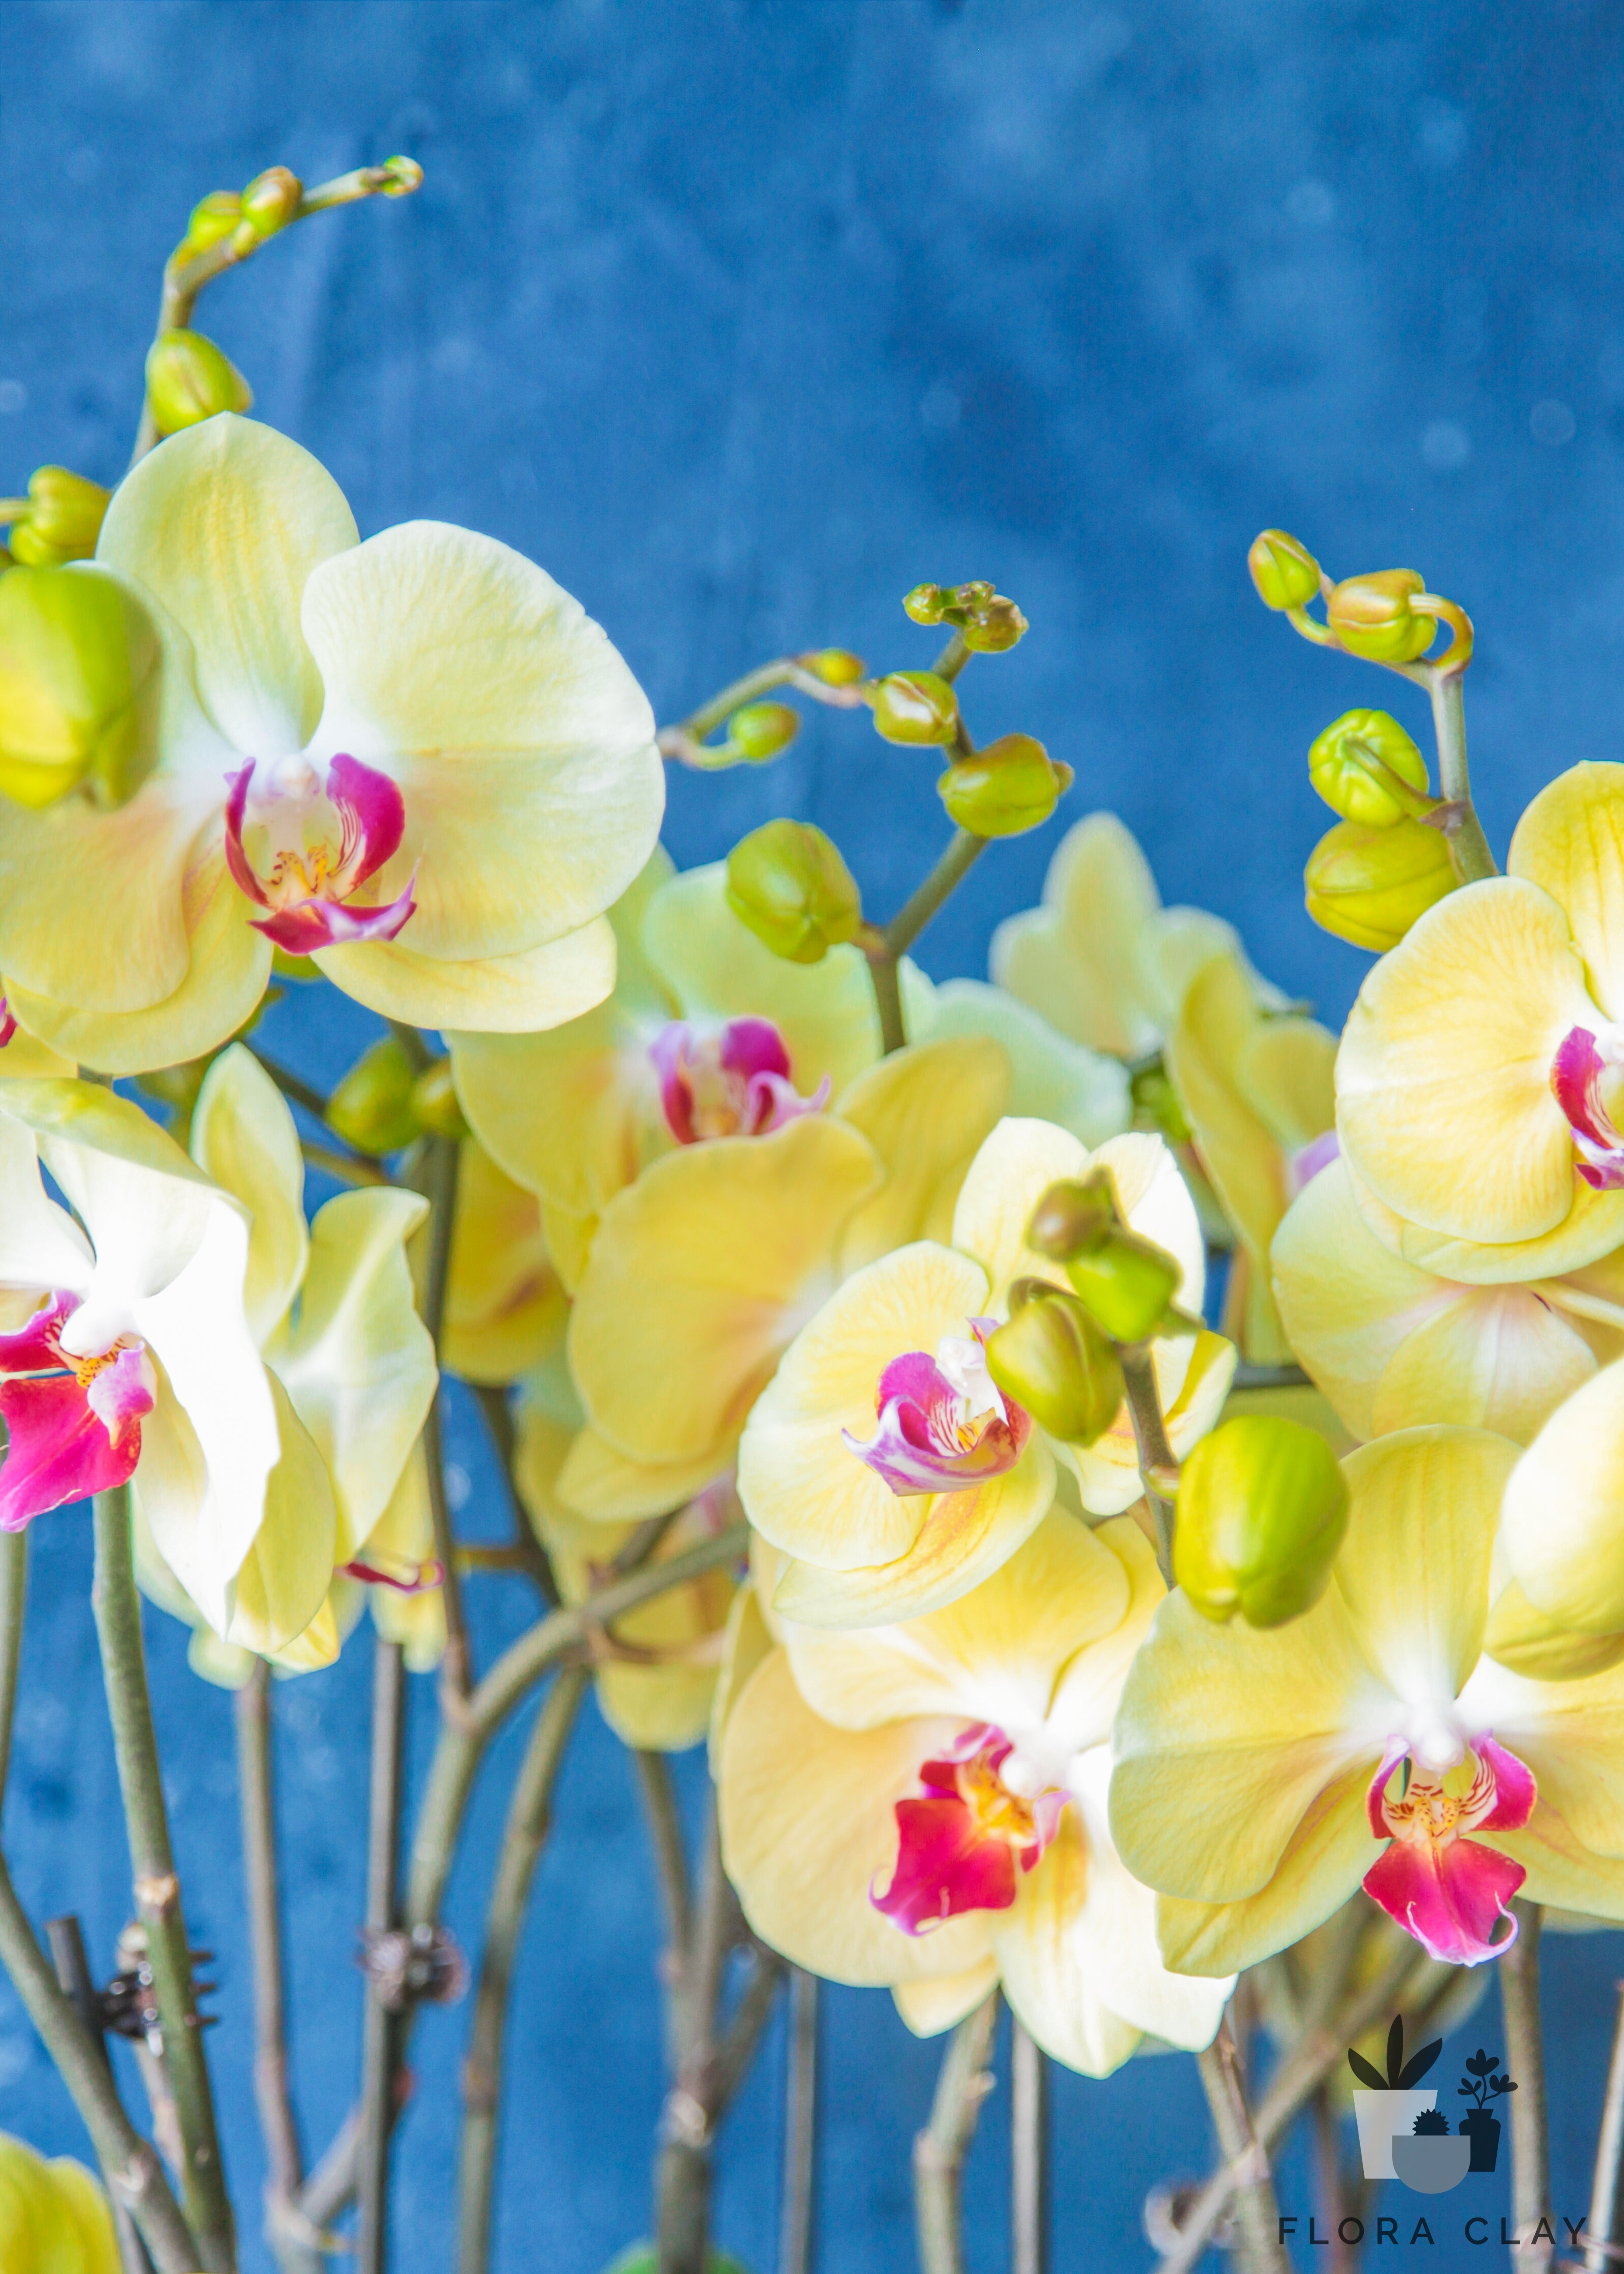 hello-yellow-orchid-arrangement-floraclay-3.jpg